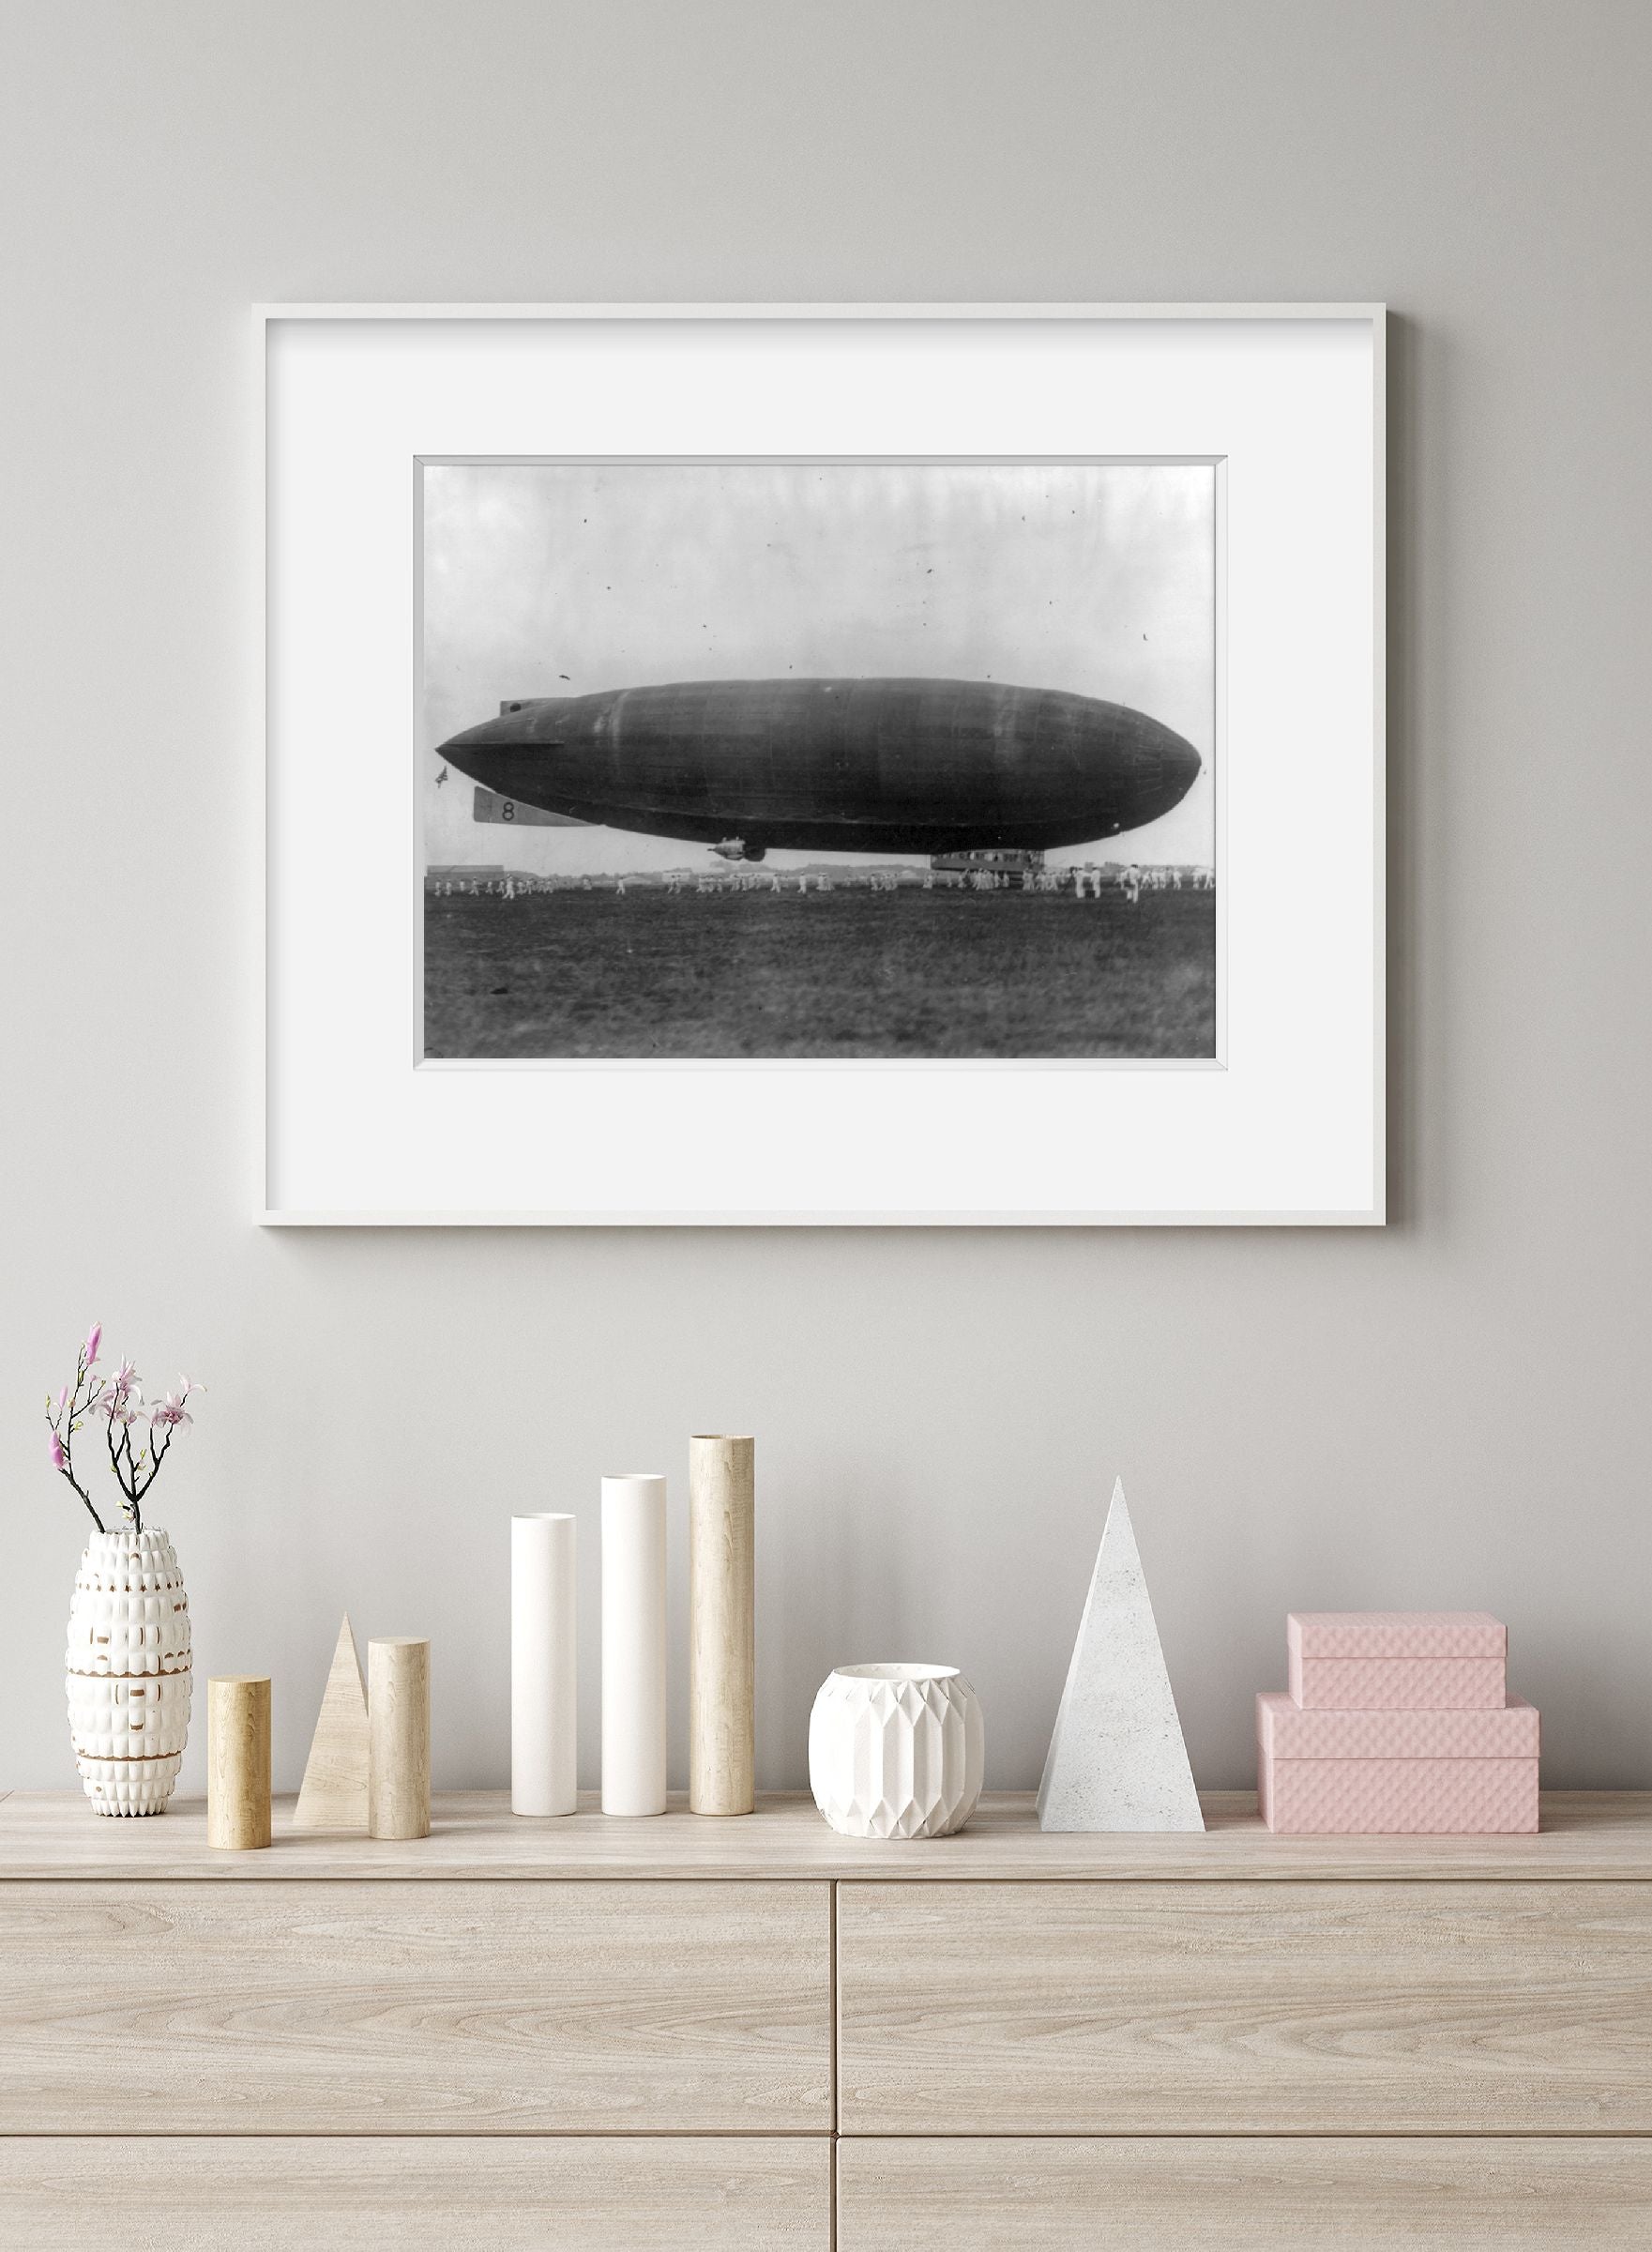 Photo: Japan's Zeppelin, homebuilt dirigible, Graf, world flight